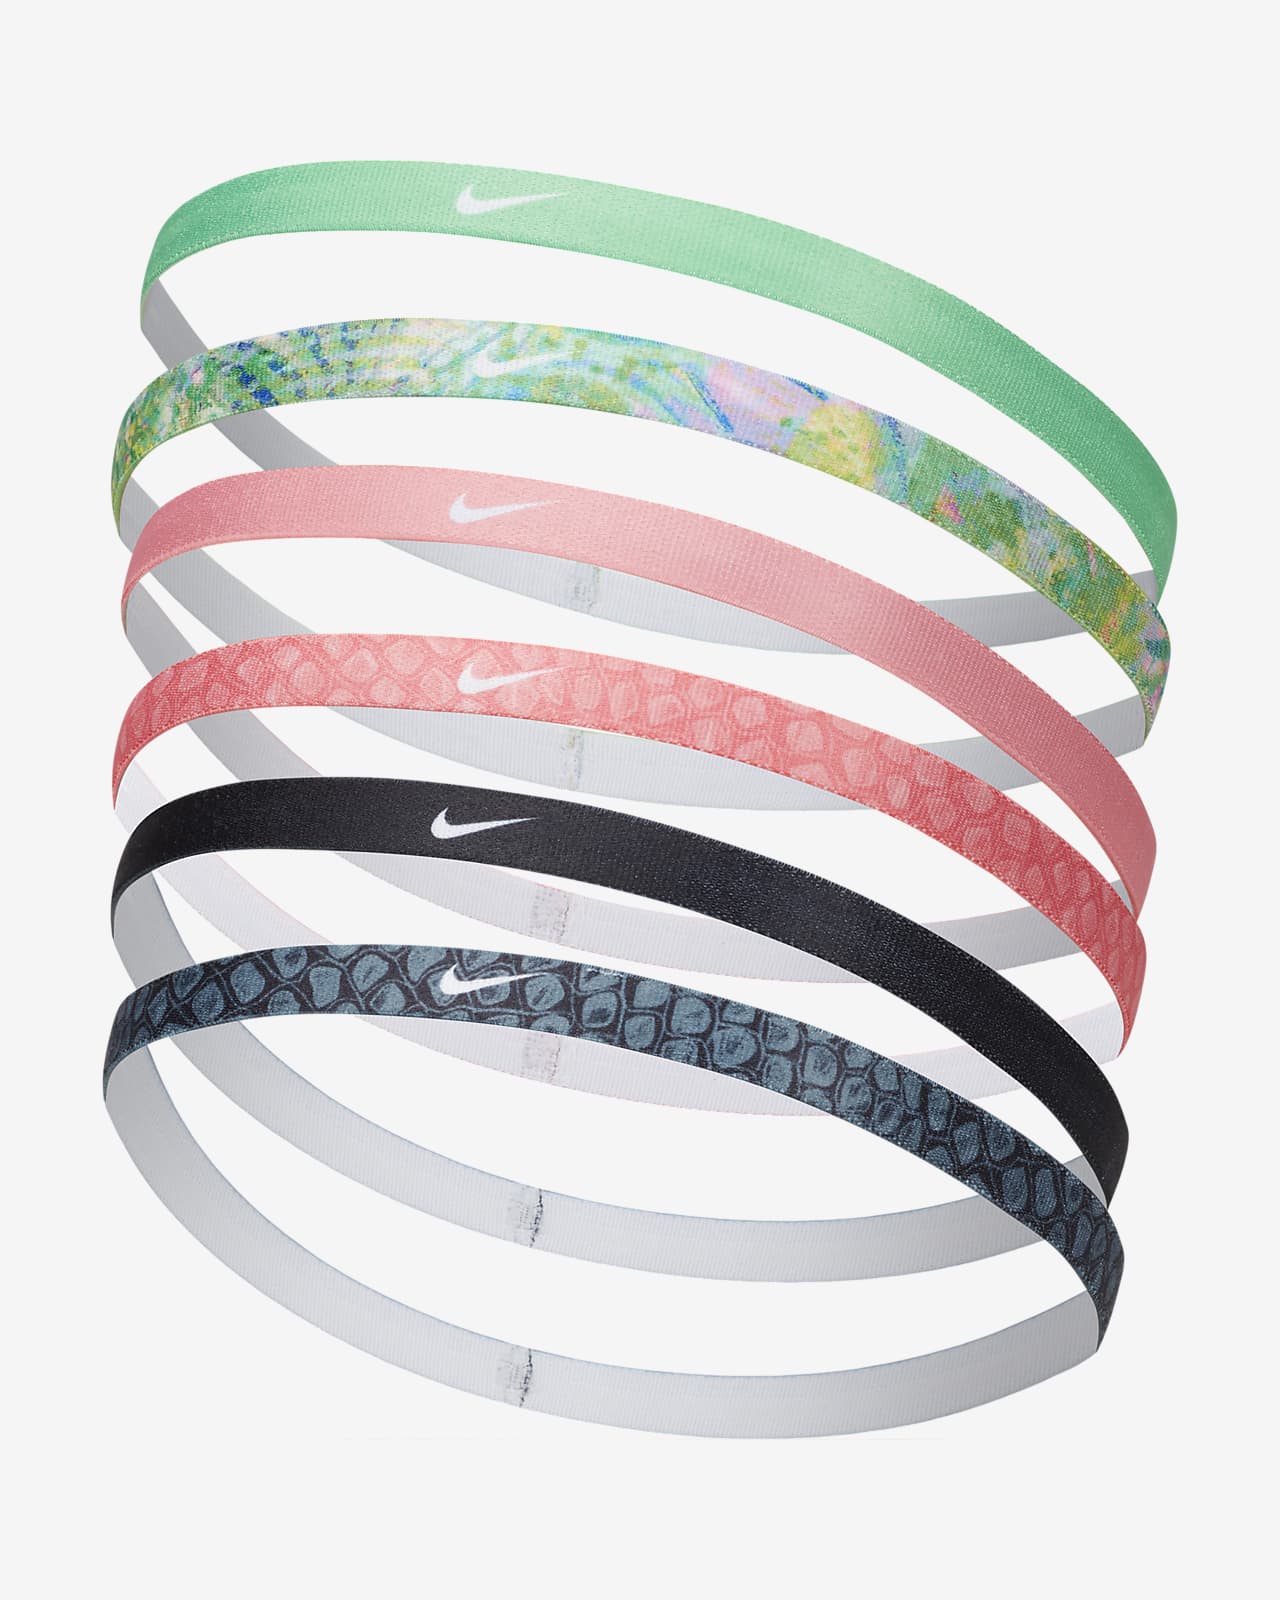 Bandeau Nike Printed (6 unités)